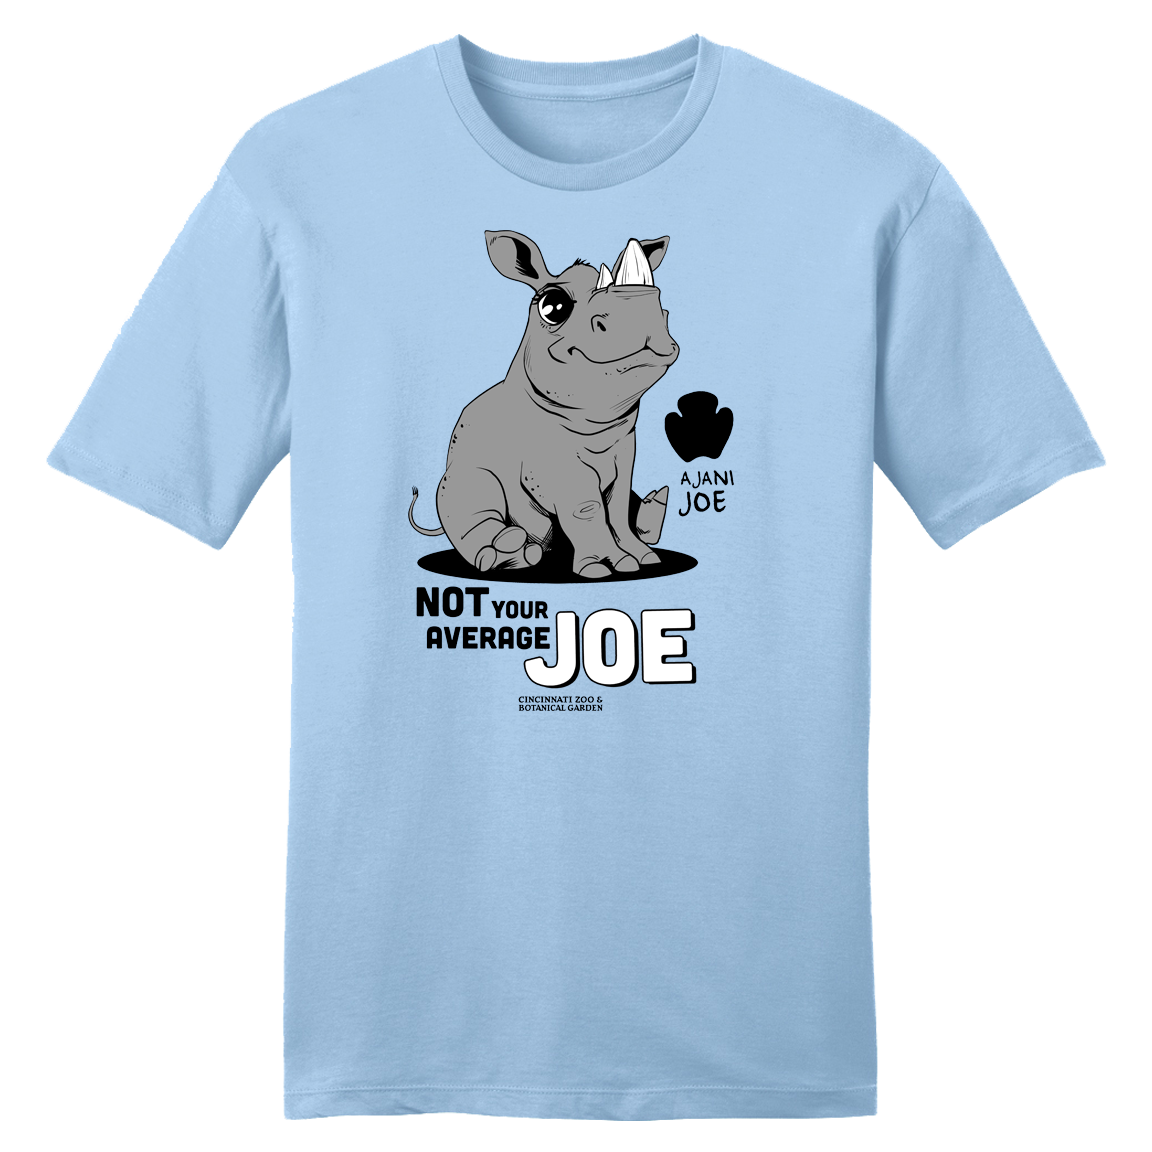 Not Your Average Joe "Ajani Joe" - Cincy Shirts